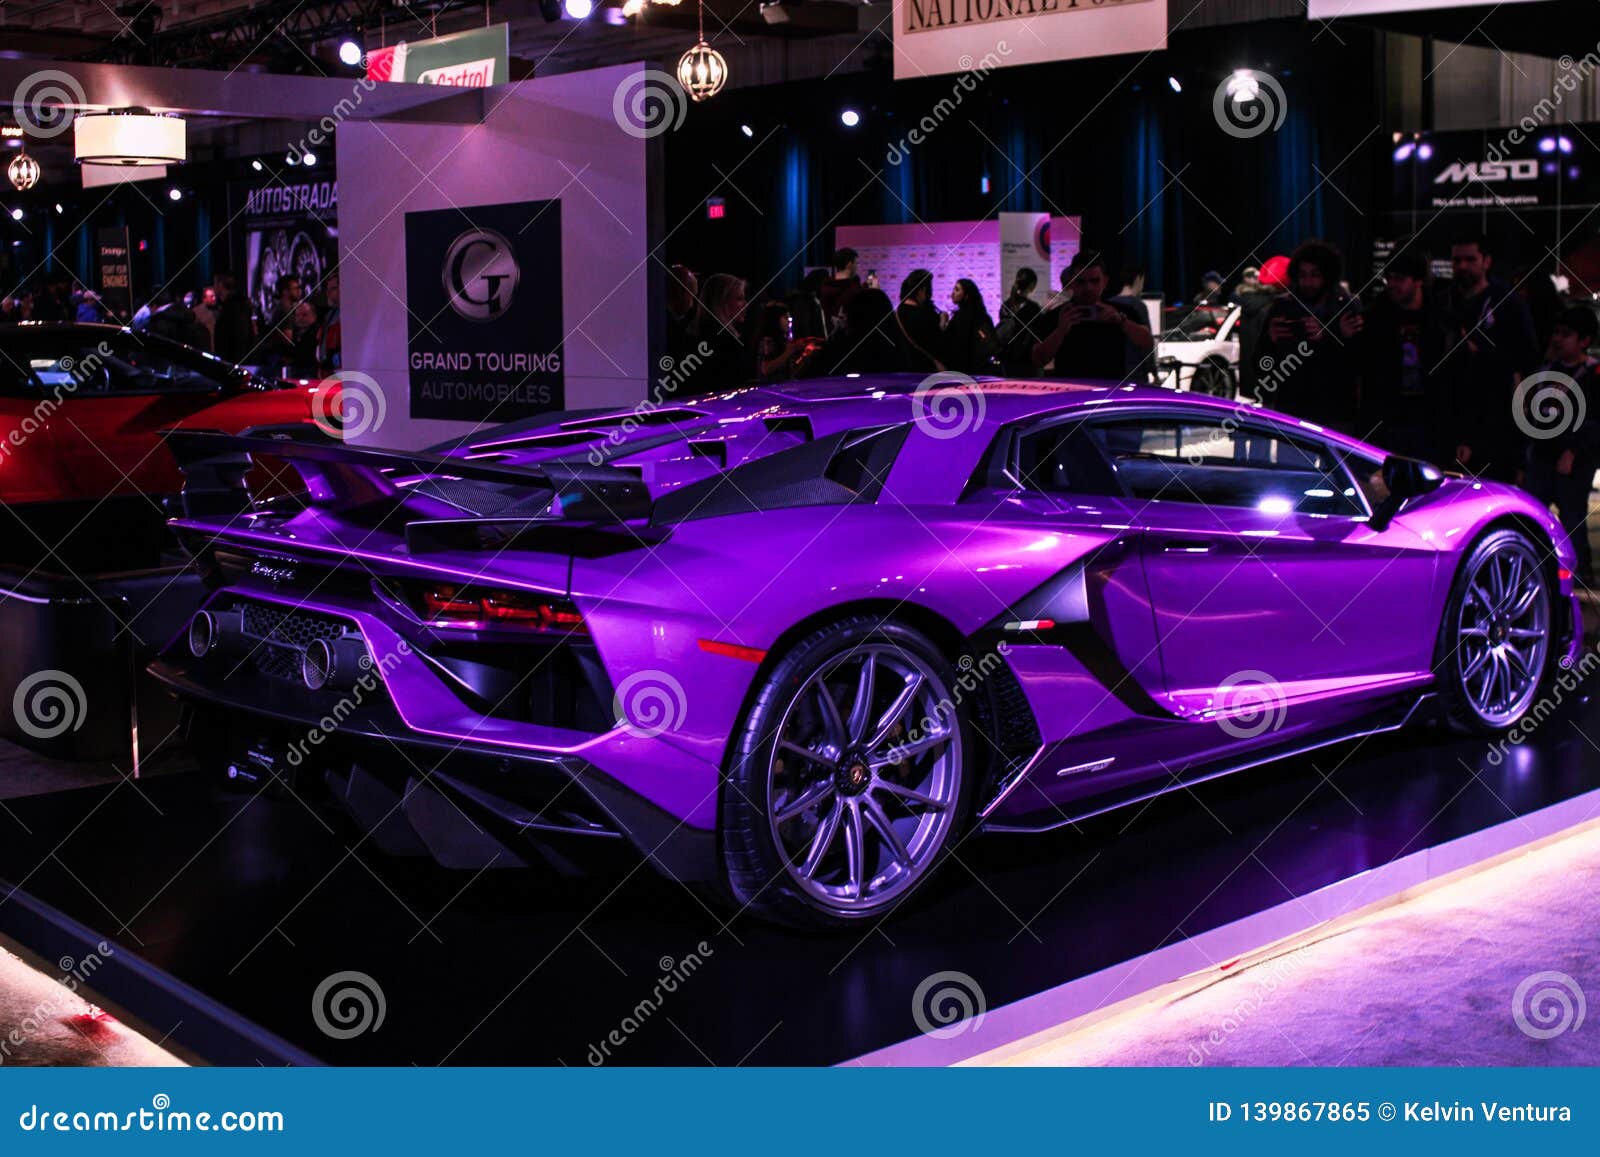 Rare Purple Lamborghini On Display Editorial Image Image Of Carpet Carohotography 139867865